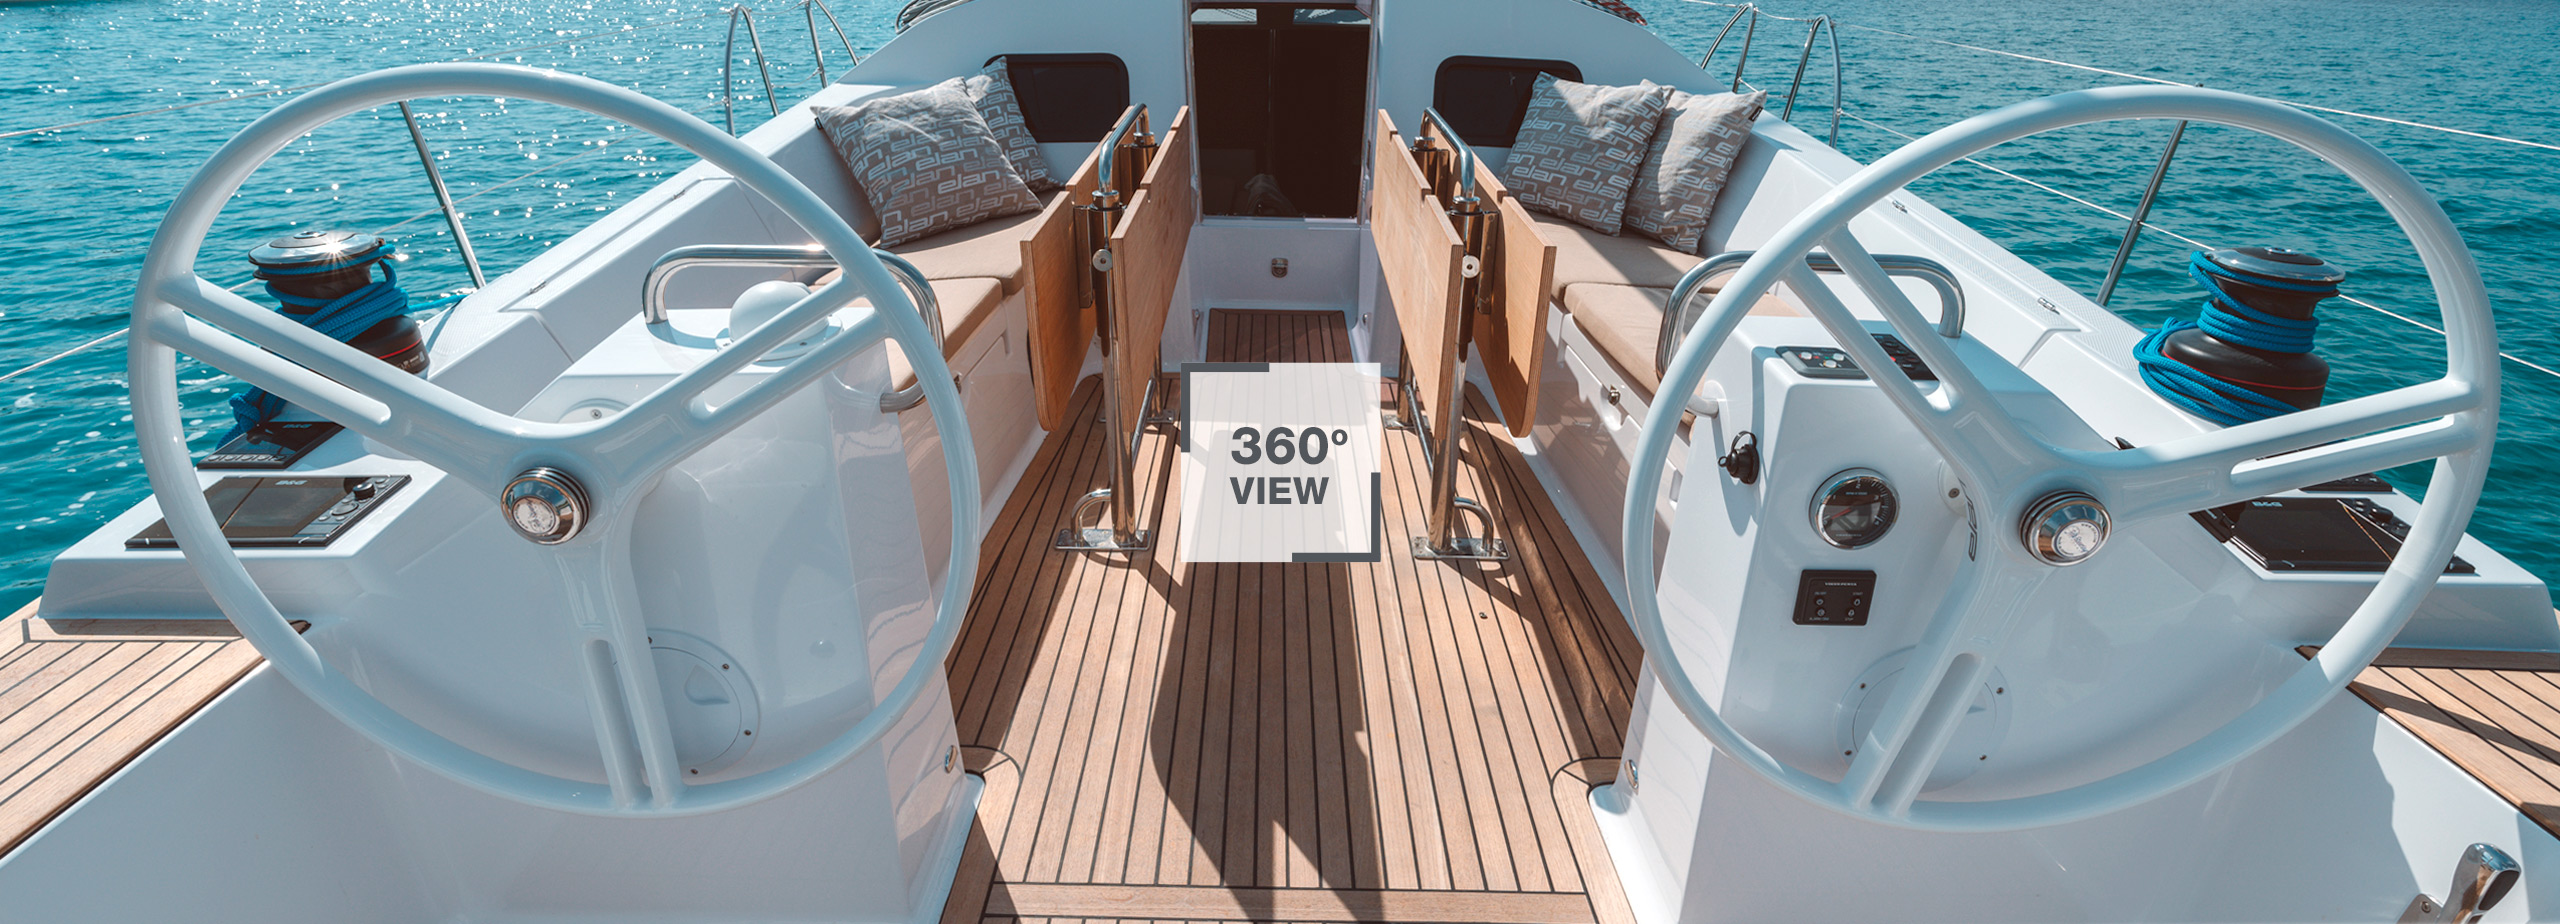 elan-yachts-impression-45.1-cruiser-sailboat-360-image